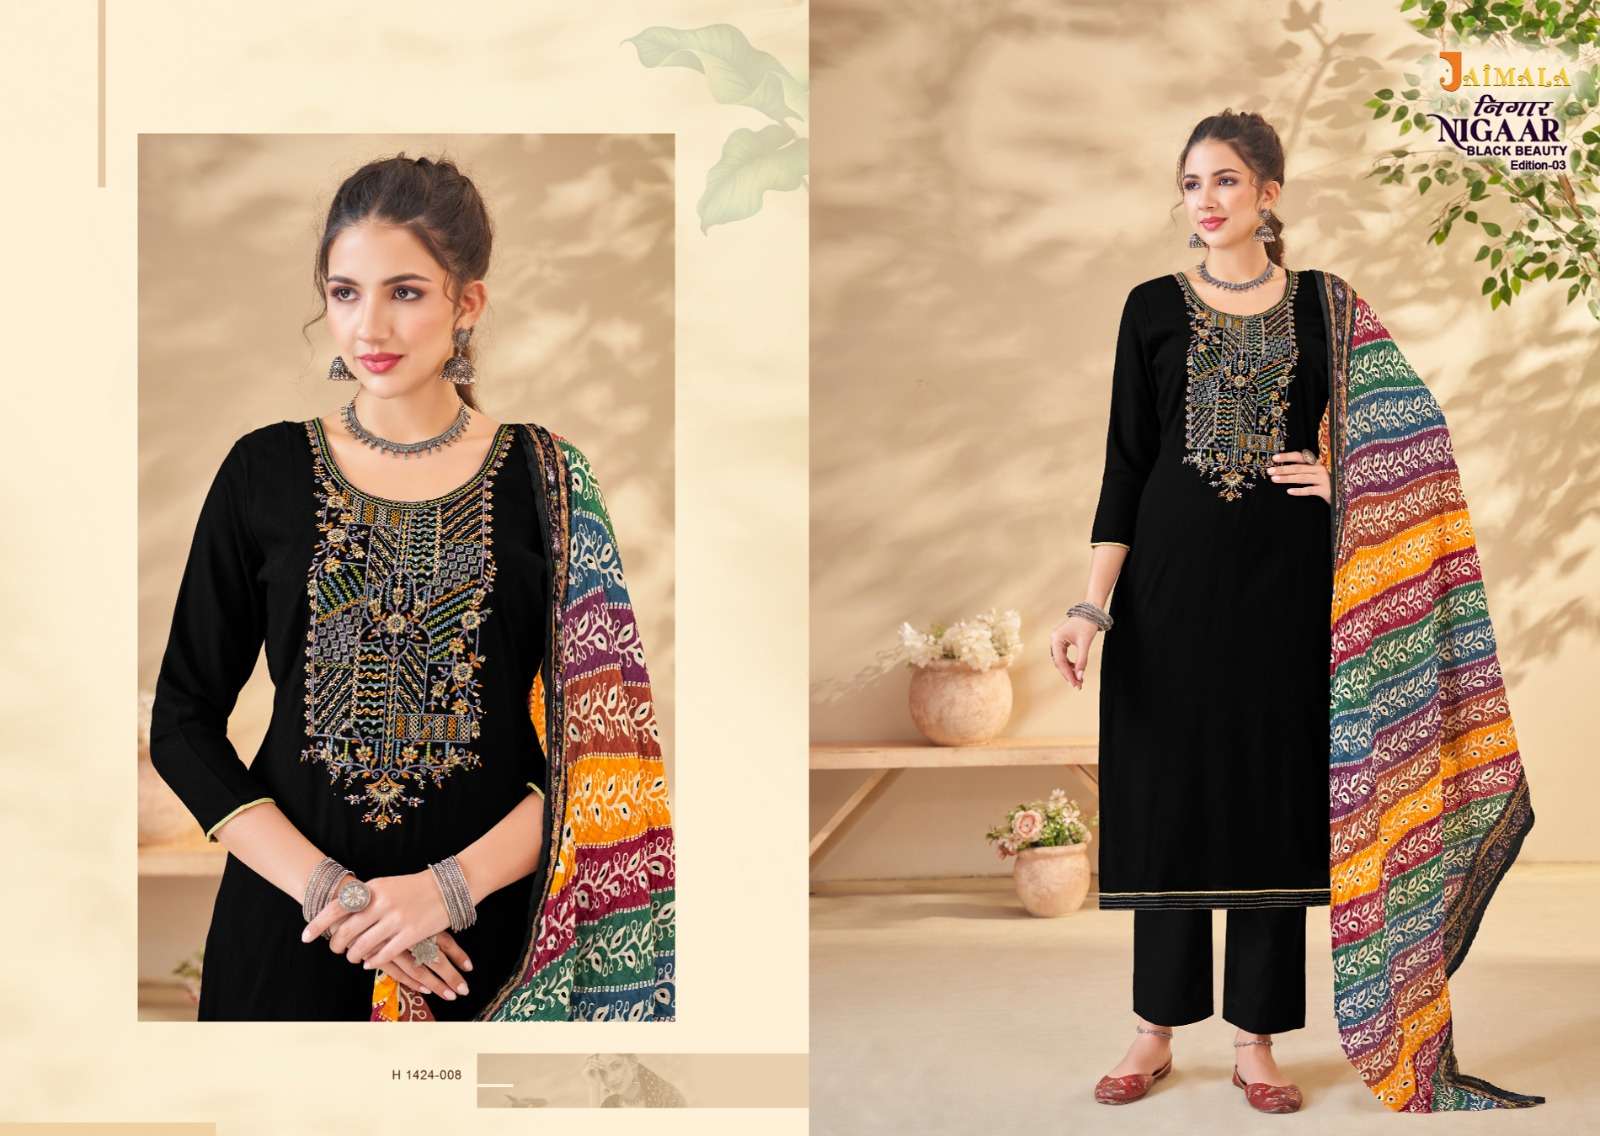 jaimala nigaar black beauty vol-3 latest designer salwar kameez wholesaler surat gujarat